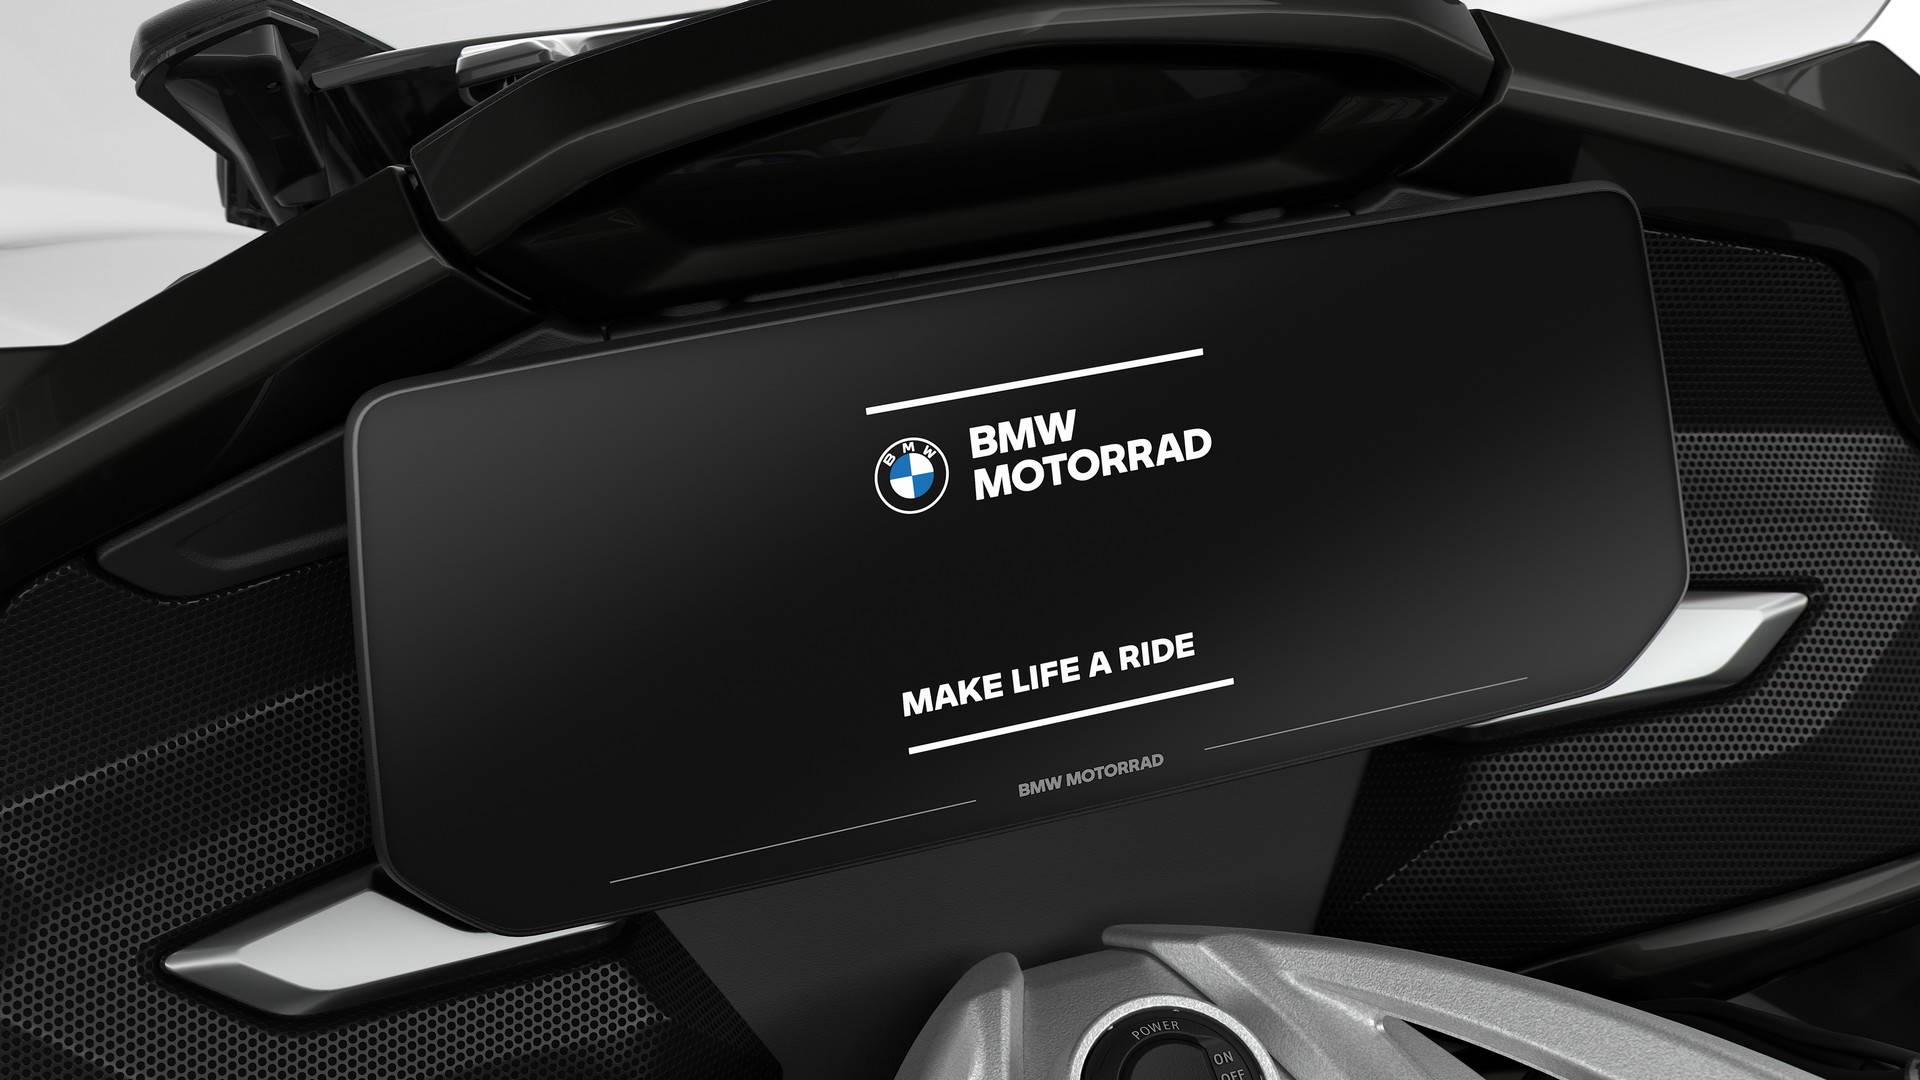 2023 BMW K 1600 GT/GTL [Specs, Features, Photos]